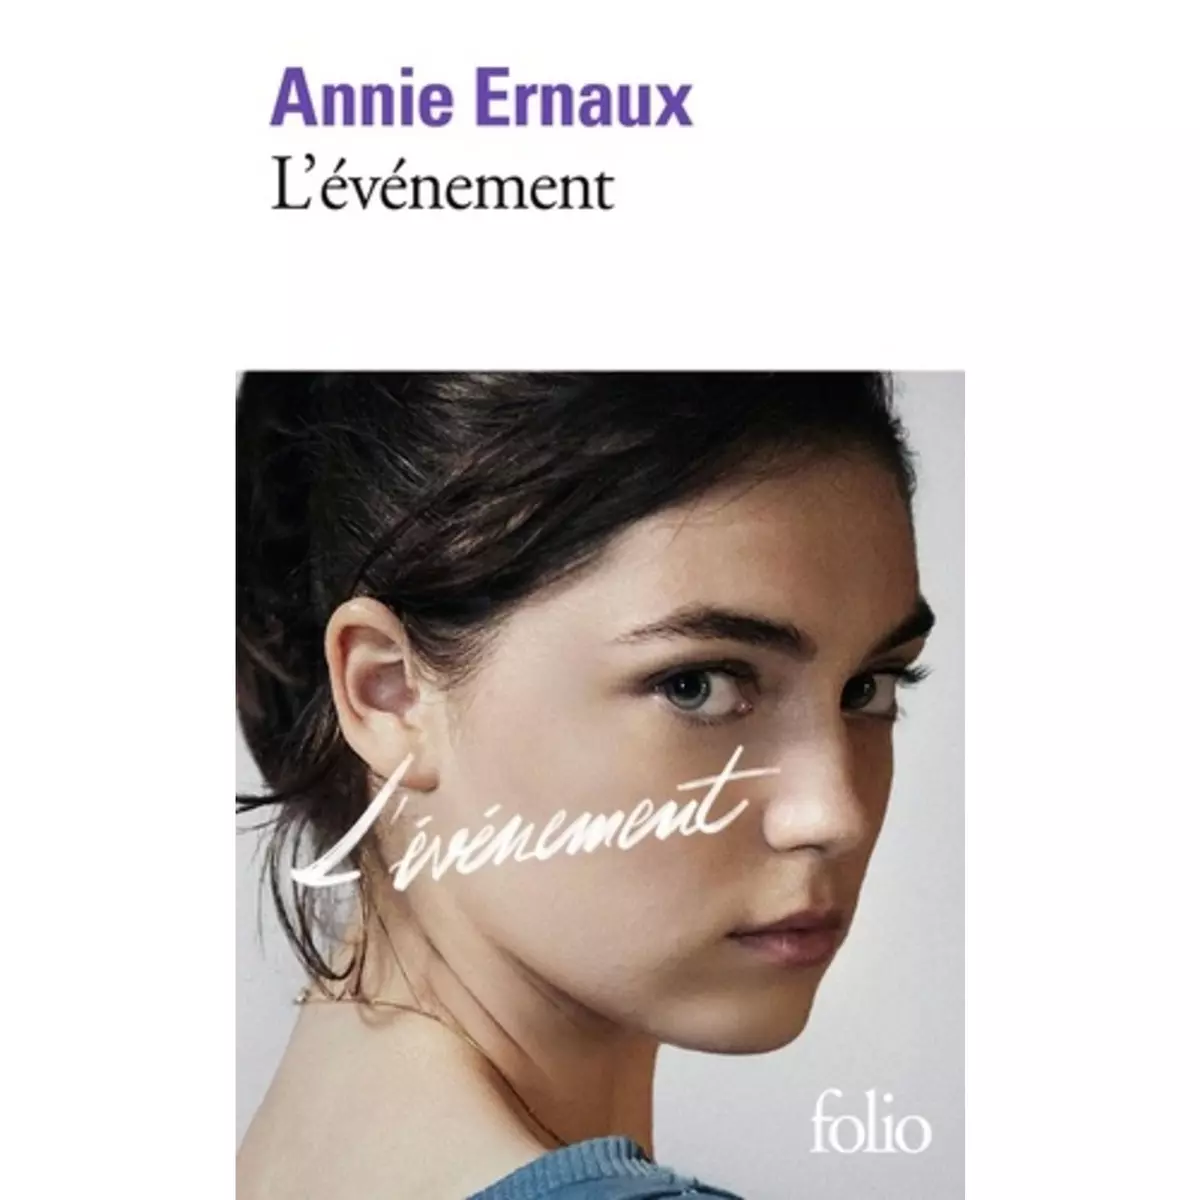  L'EVENEMENT, Ernaux Annie